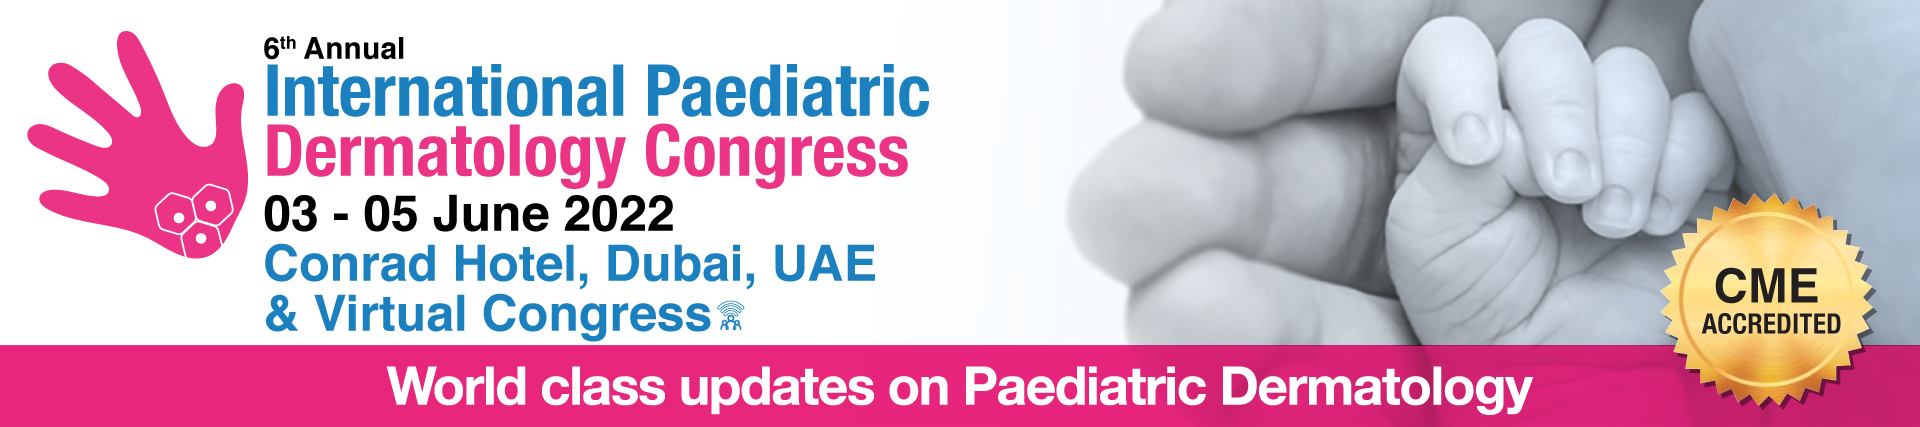 International Paediatric Dermatology Congress